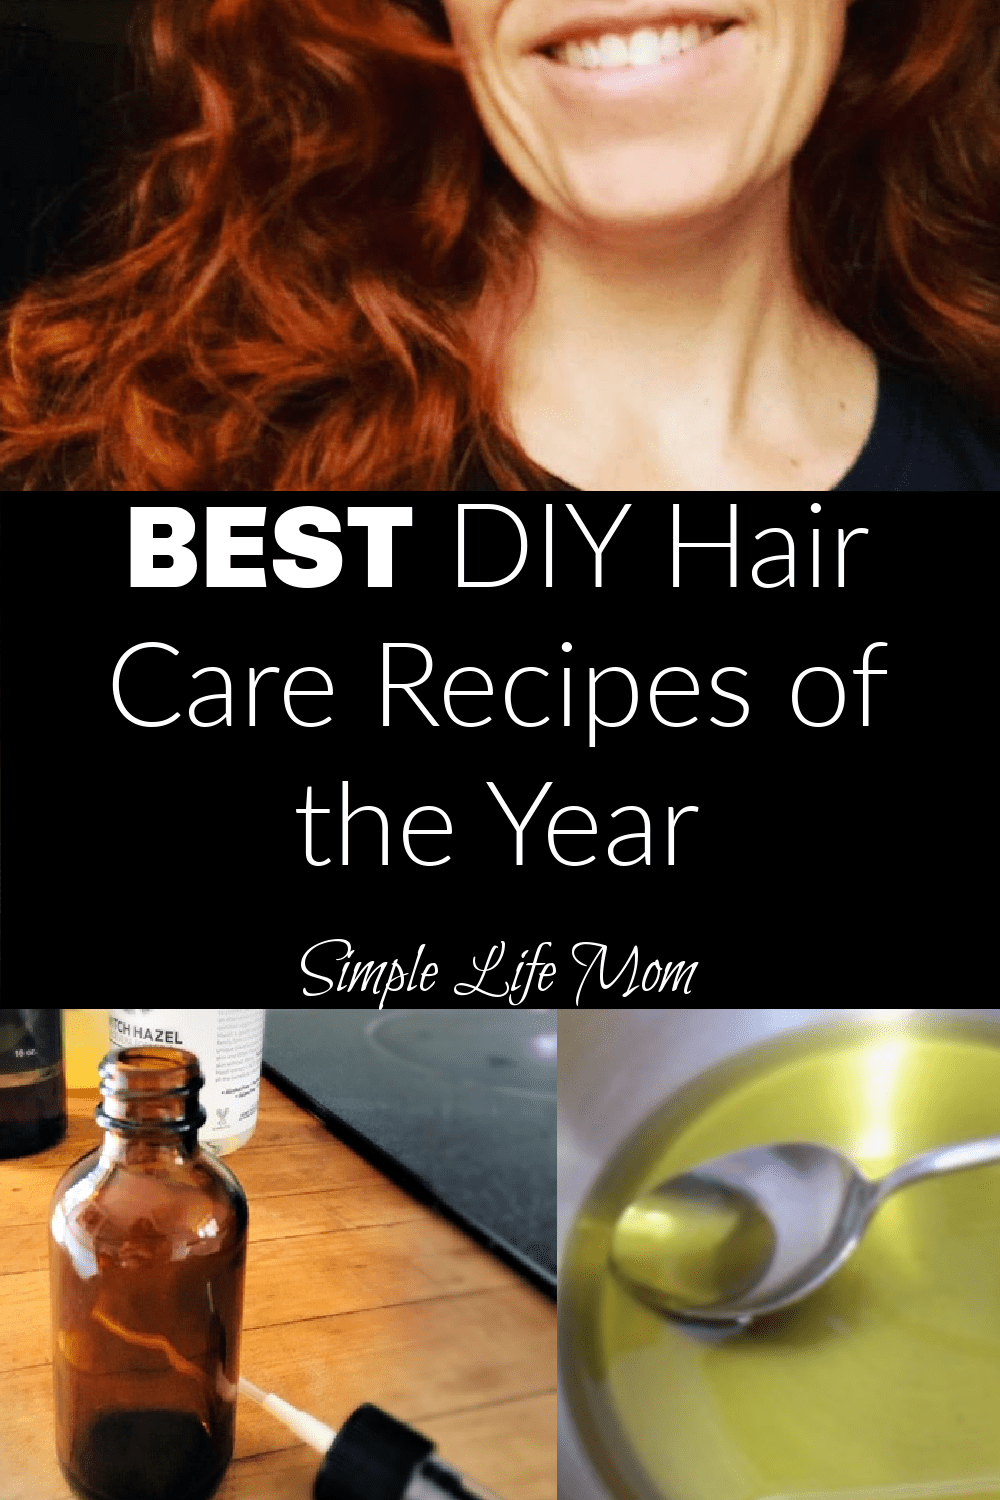 8 DIY Hair Spray Recipes Using Environmentally Friendly Ingredients